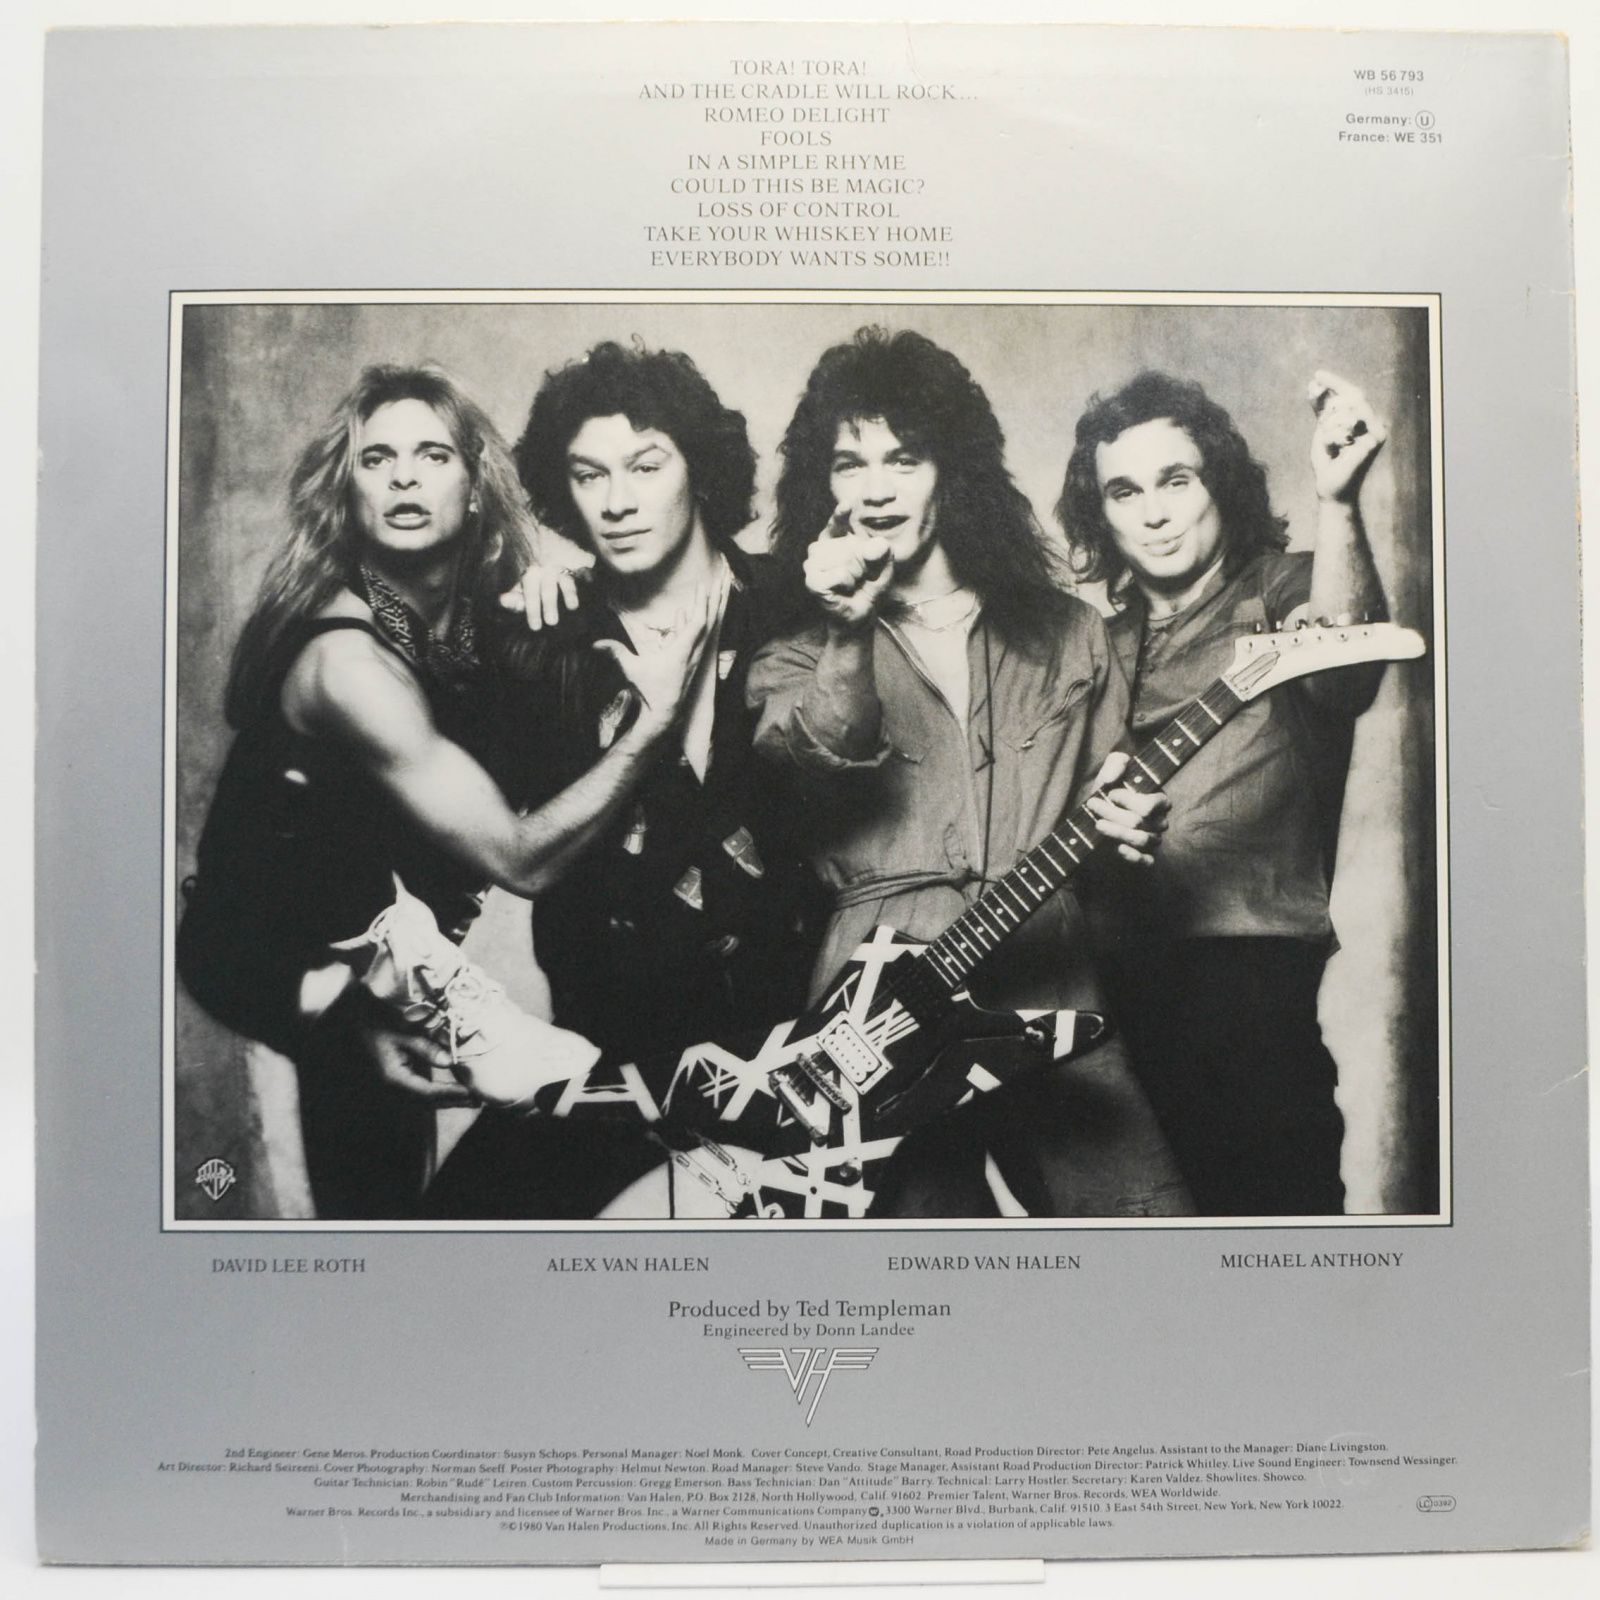 Van Halen — Women And Children First, 1980